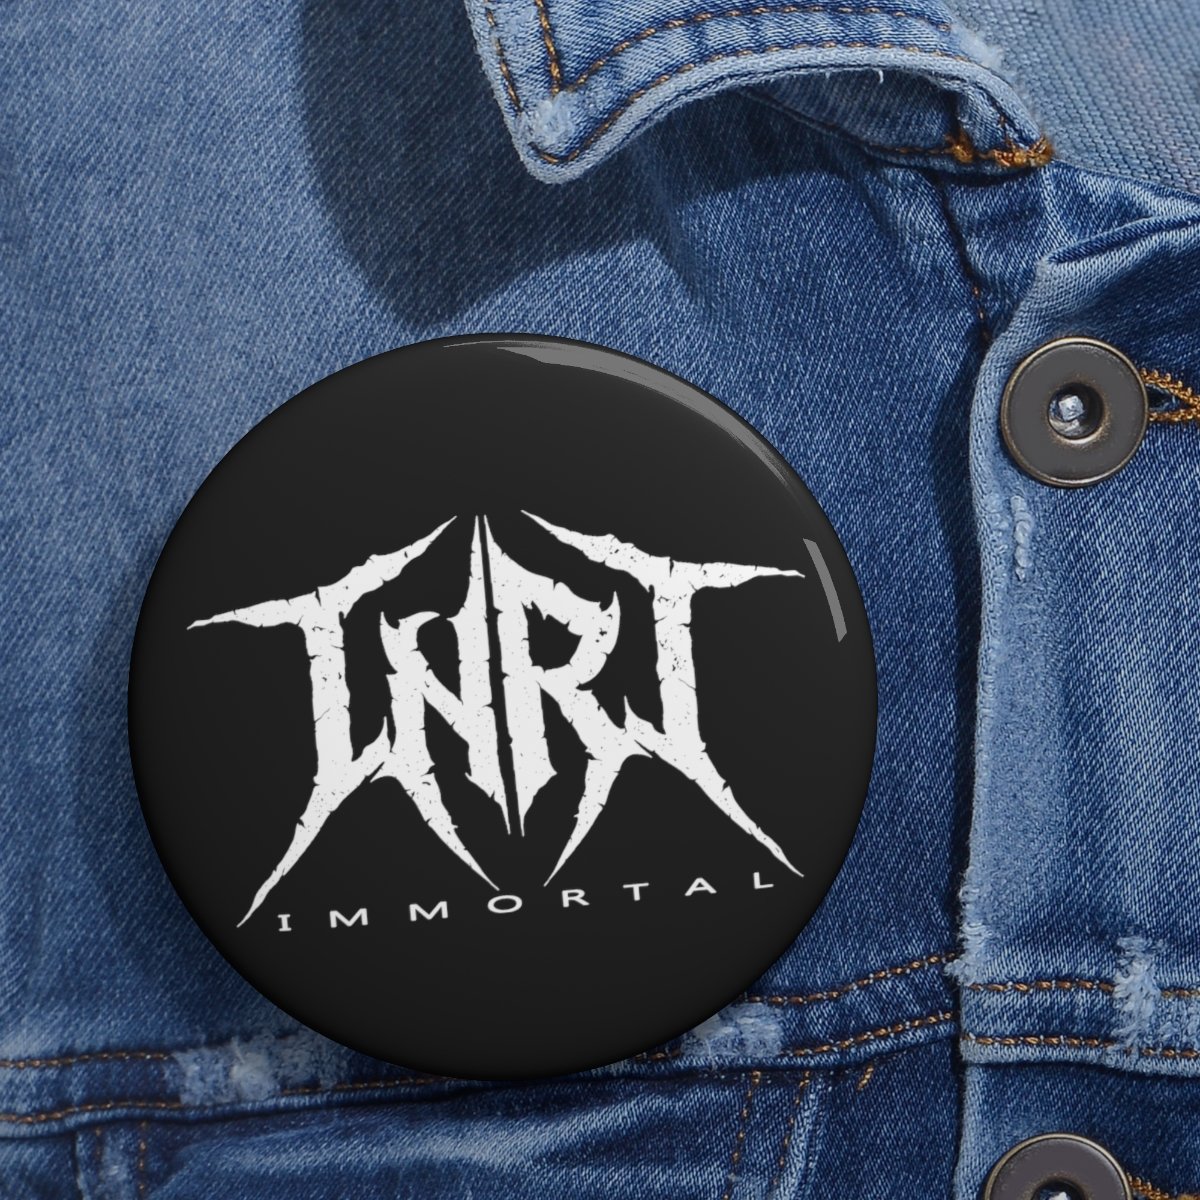 INRI Immortal Logo Pin Buttons